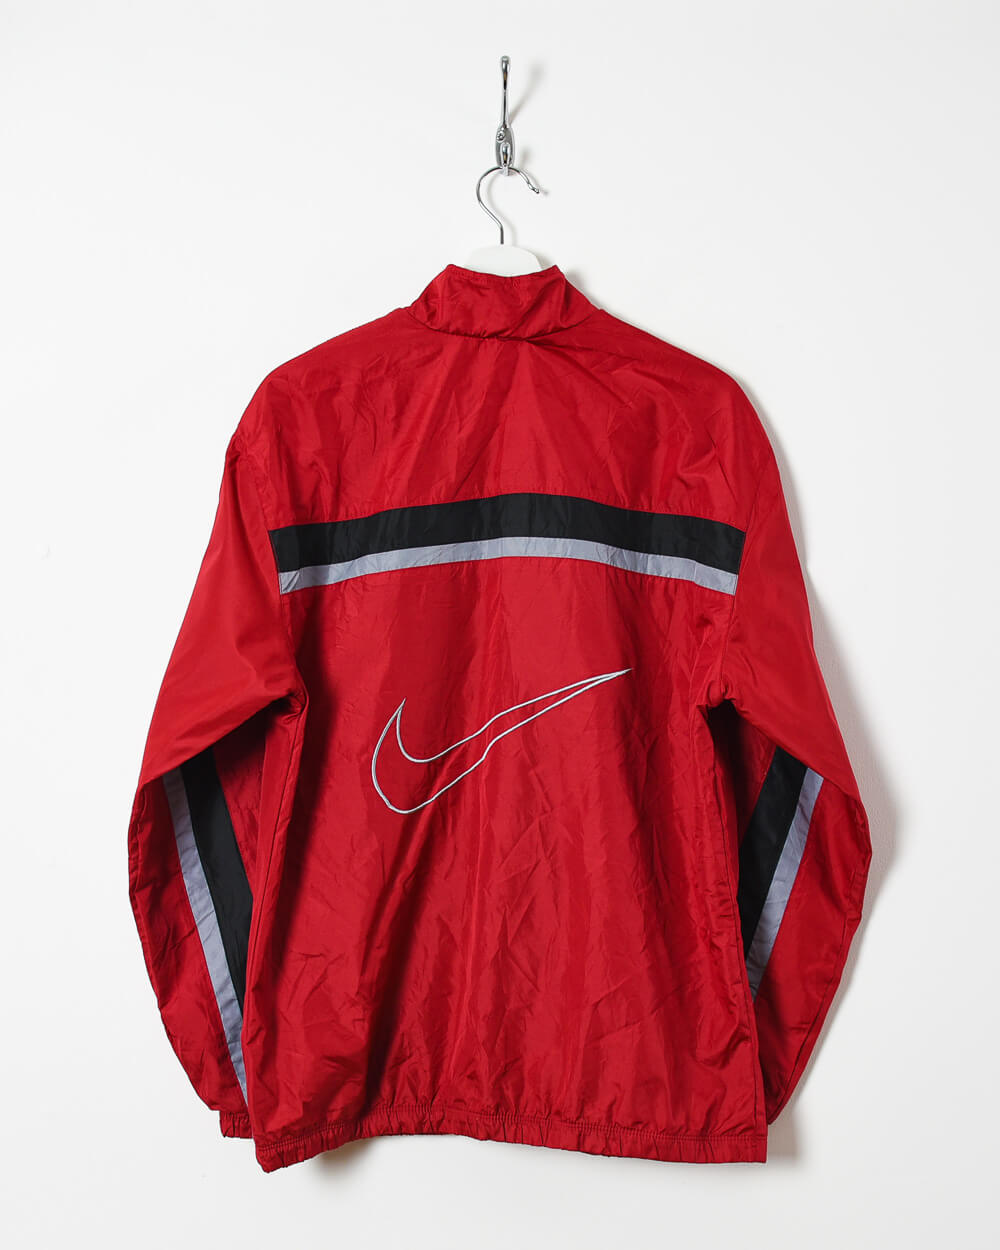 Nike Windbreaker Jacket - Small - Domno Vintage 90s, 80s, 00s Retro and Vintage Clothing 